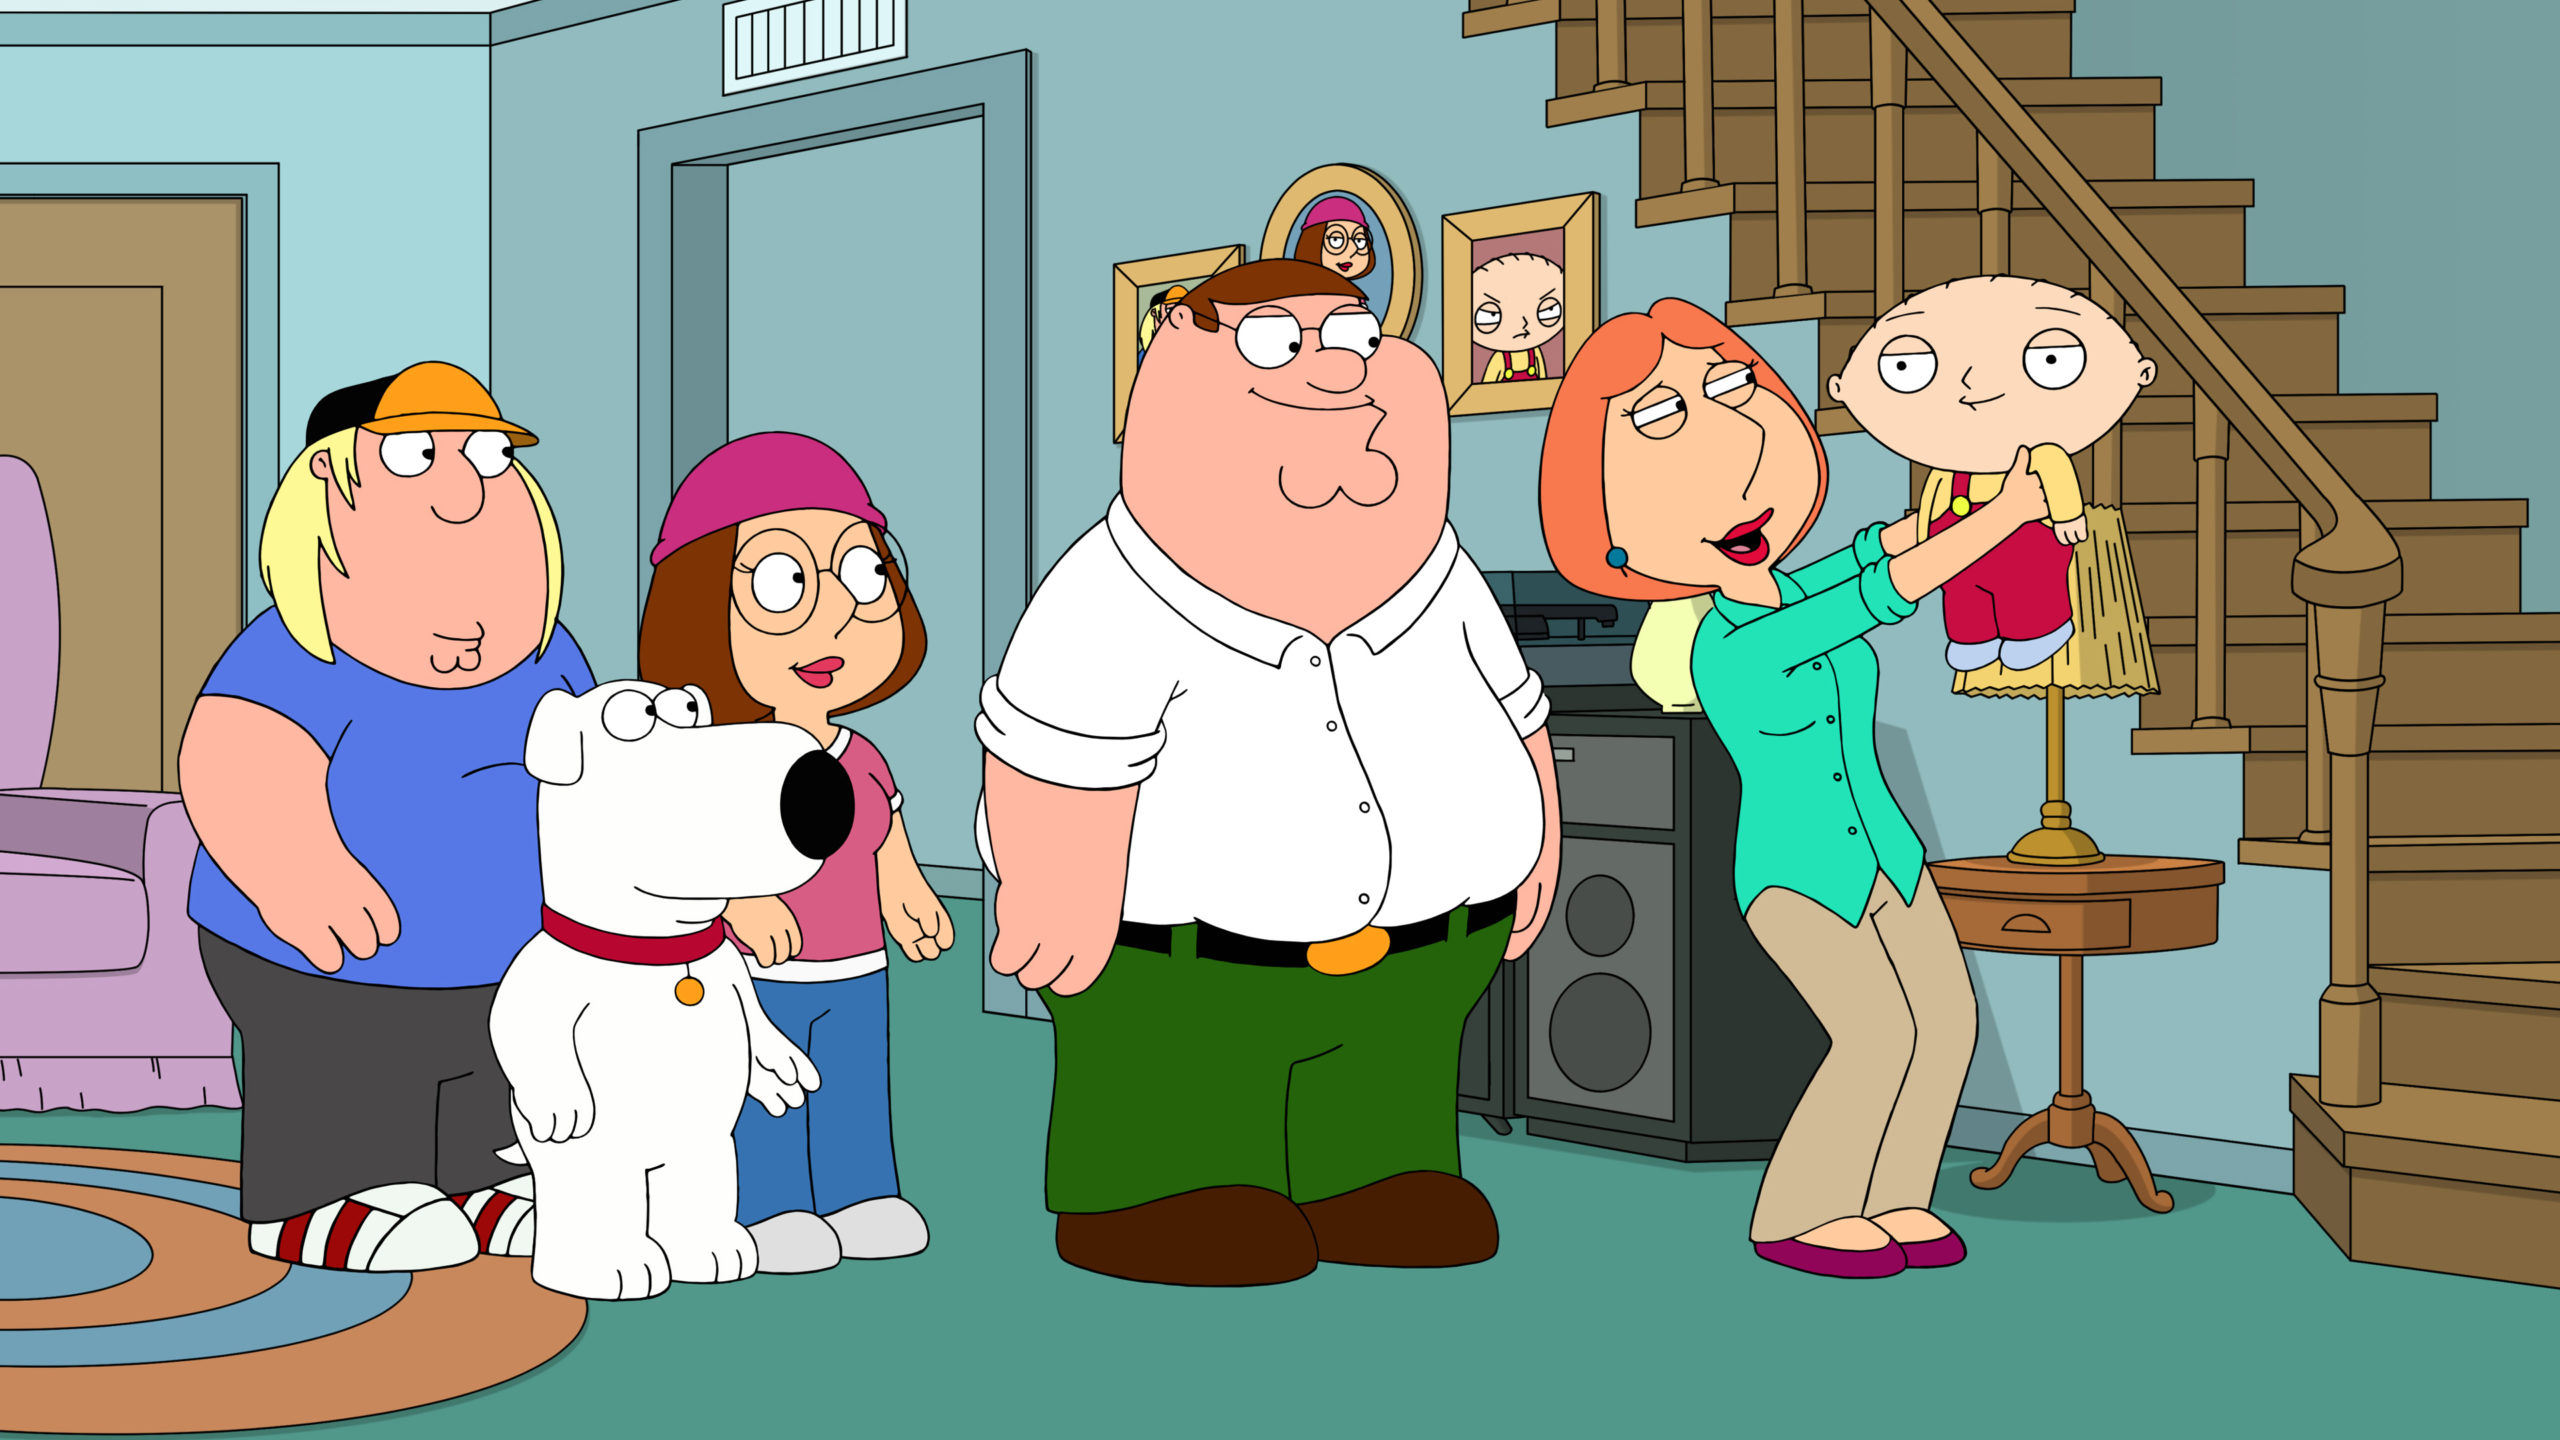 Adult swim is going to quiet ‘Family Guy’